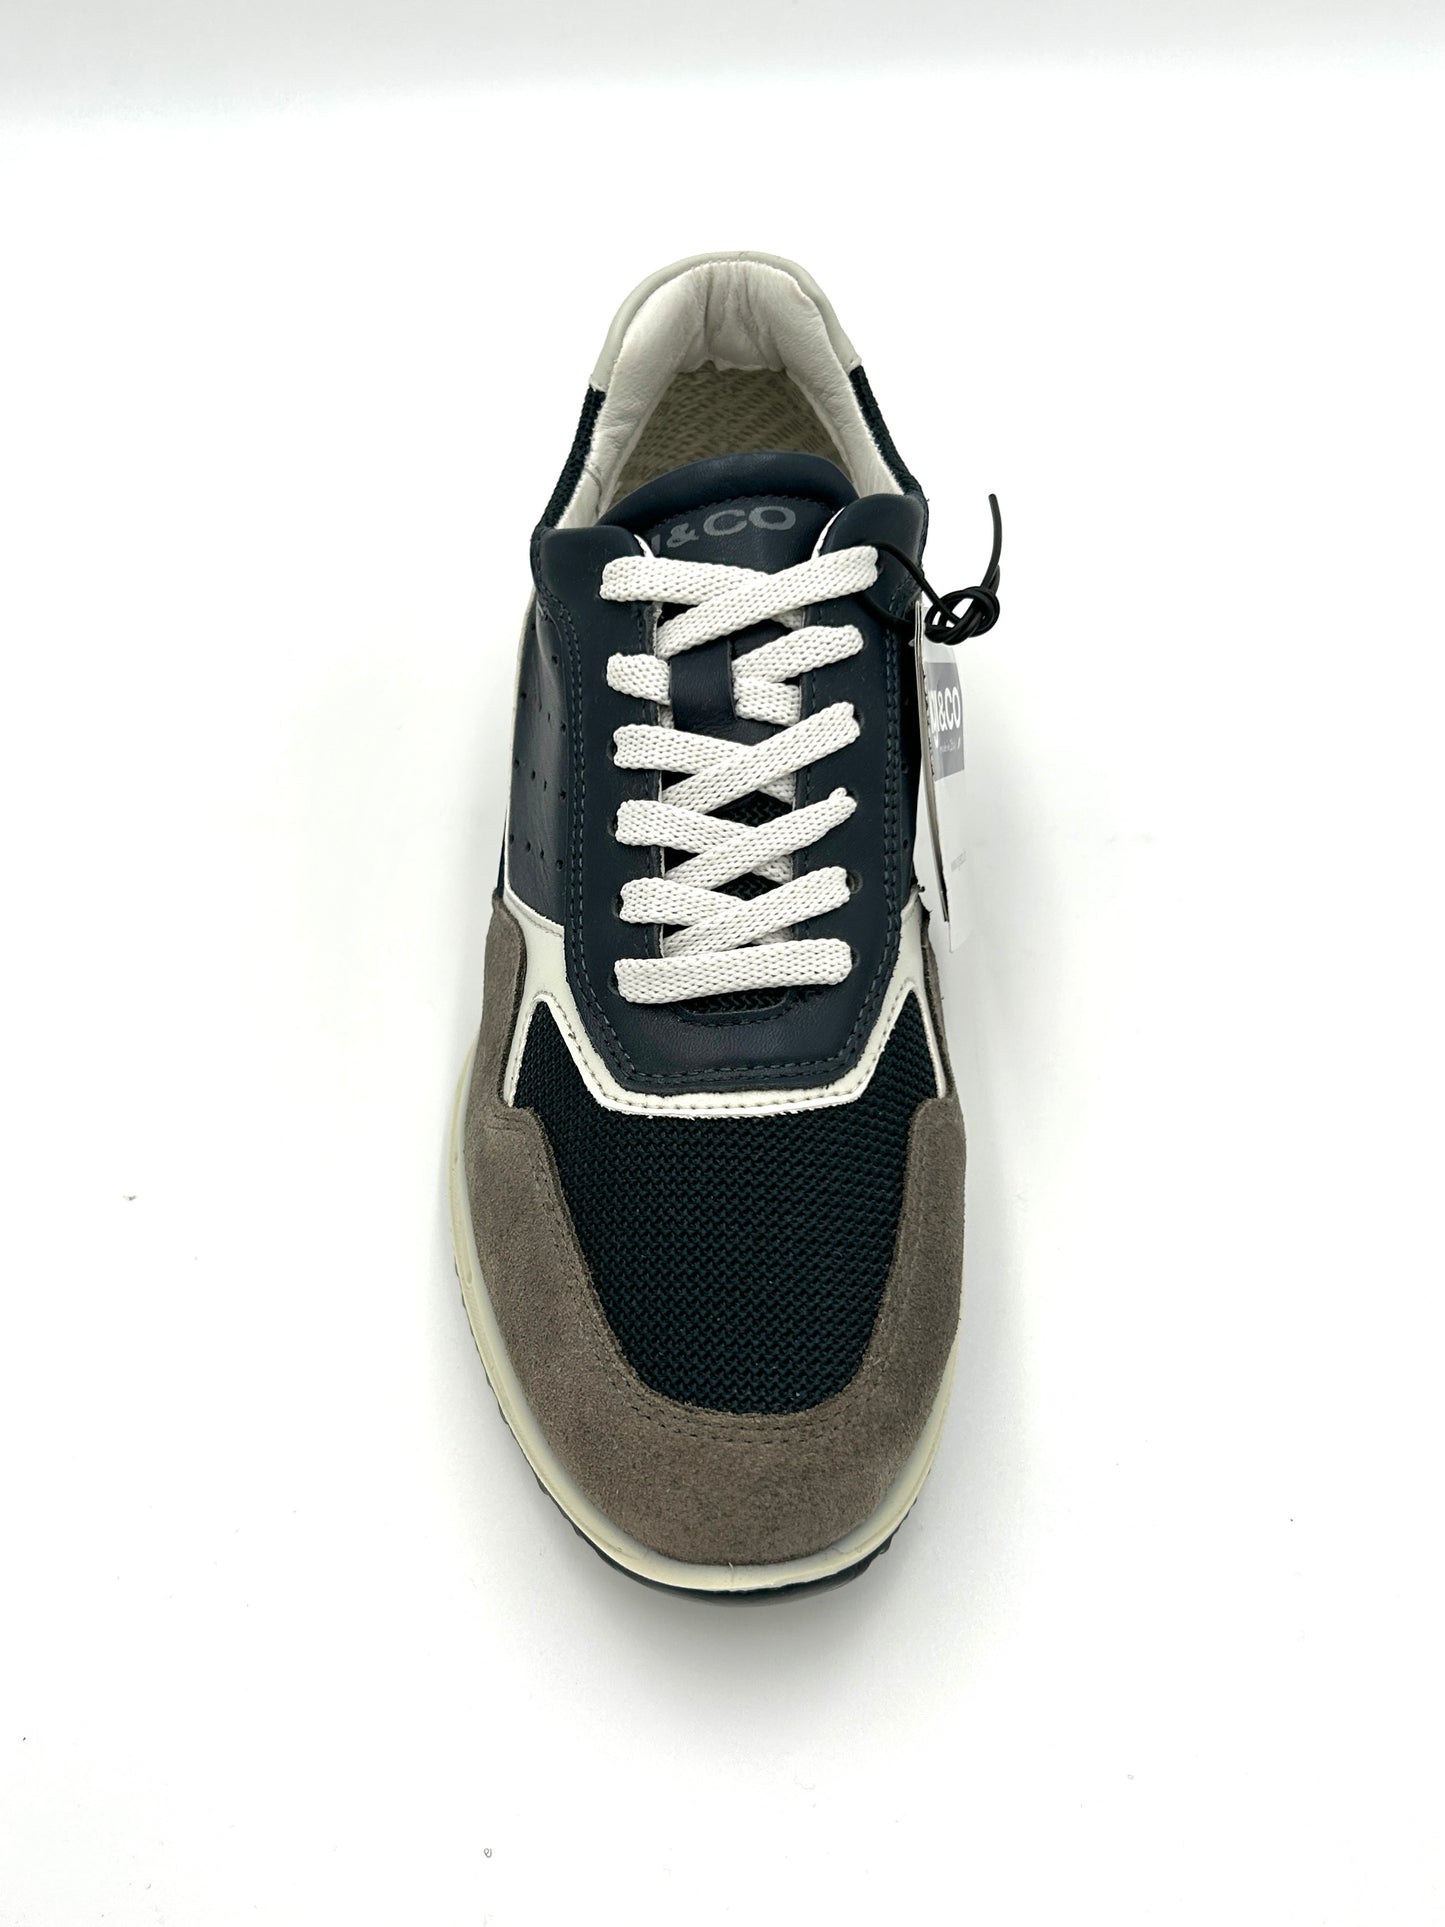 Igi&co Sneakers in rete - blu navy (GORE-TEX) - Igi&co